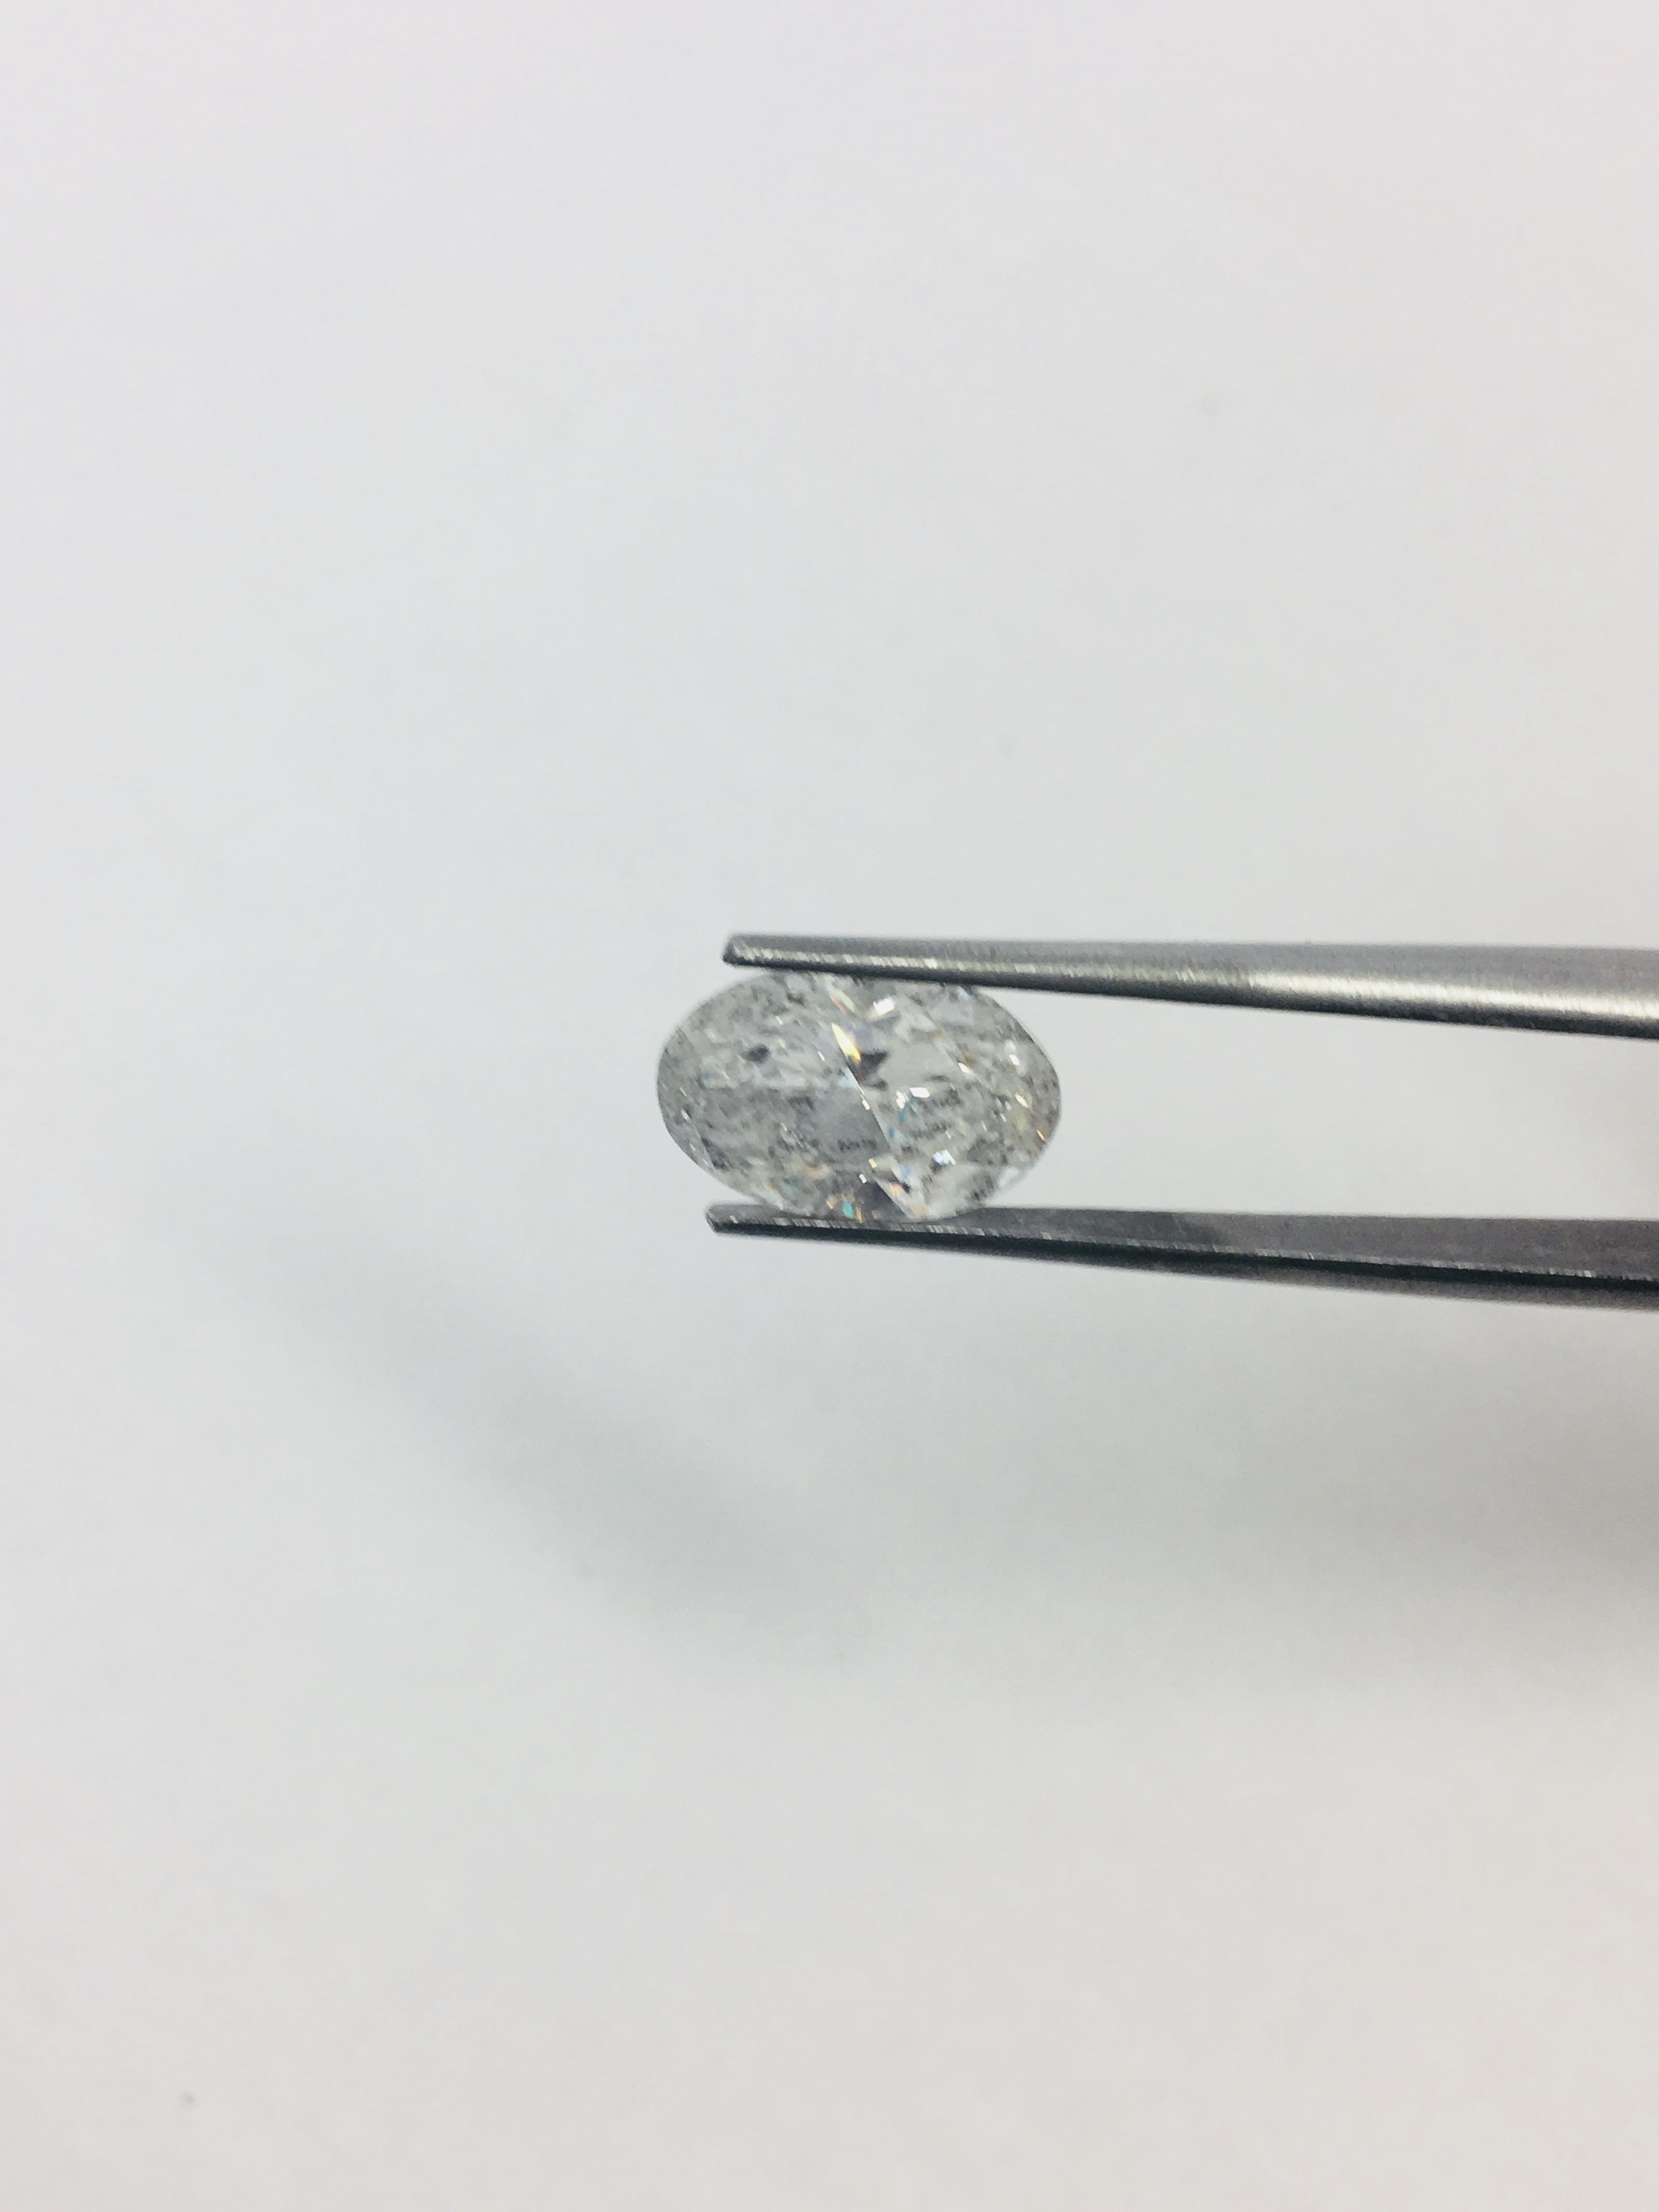 3.50ct oval diamond - Image 4 of 4